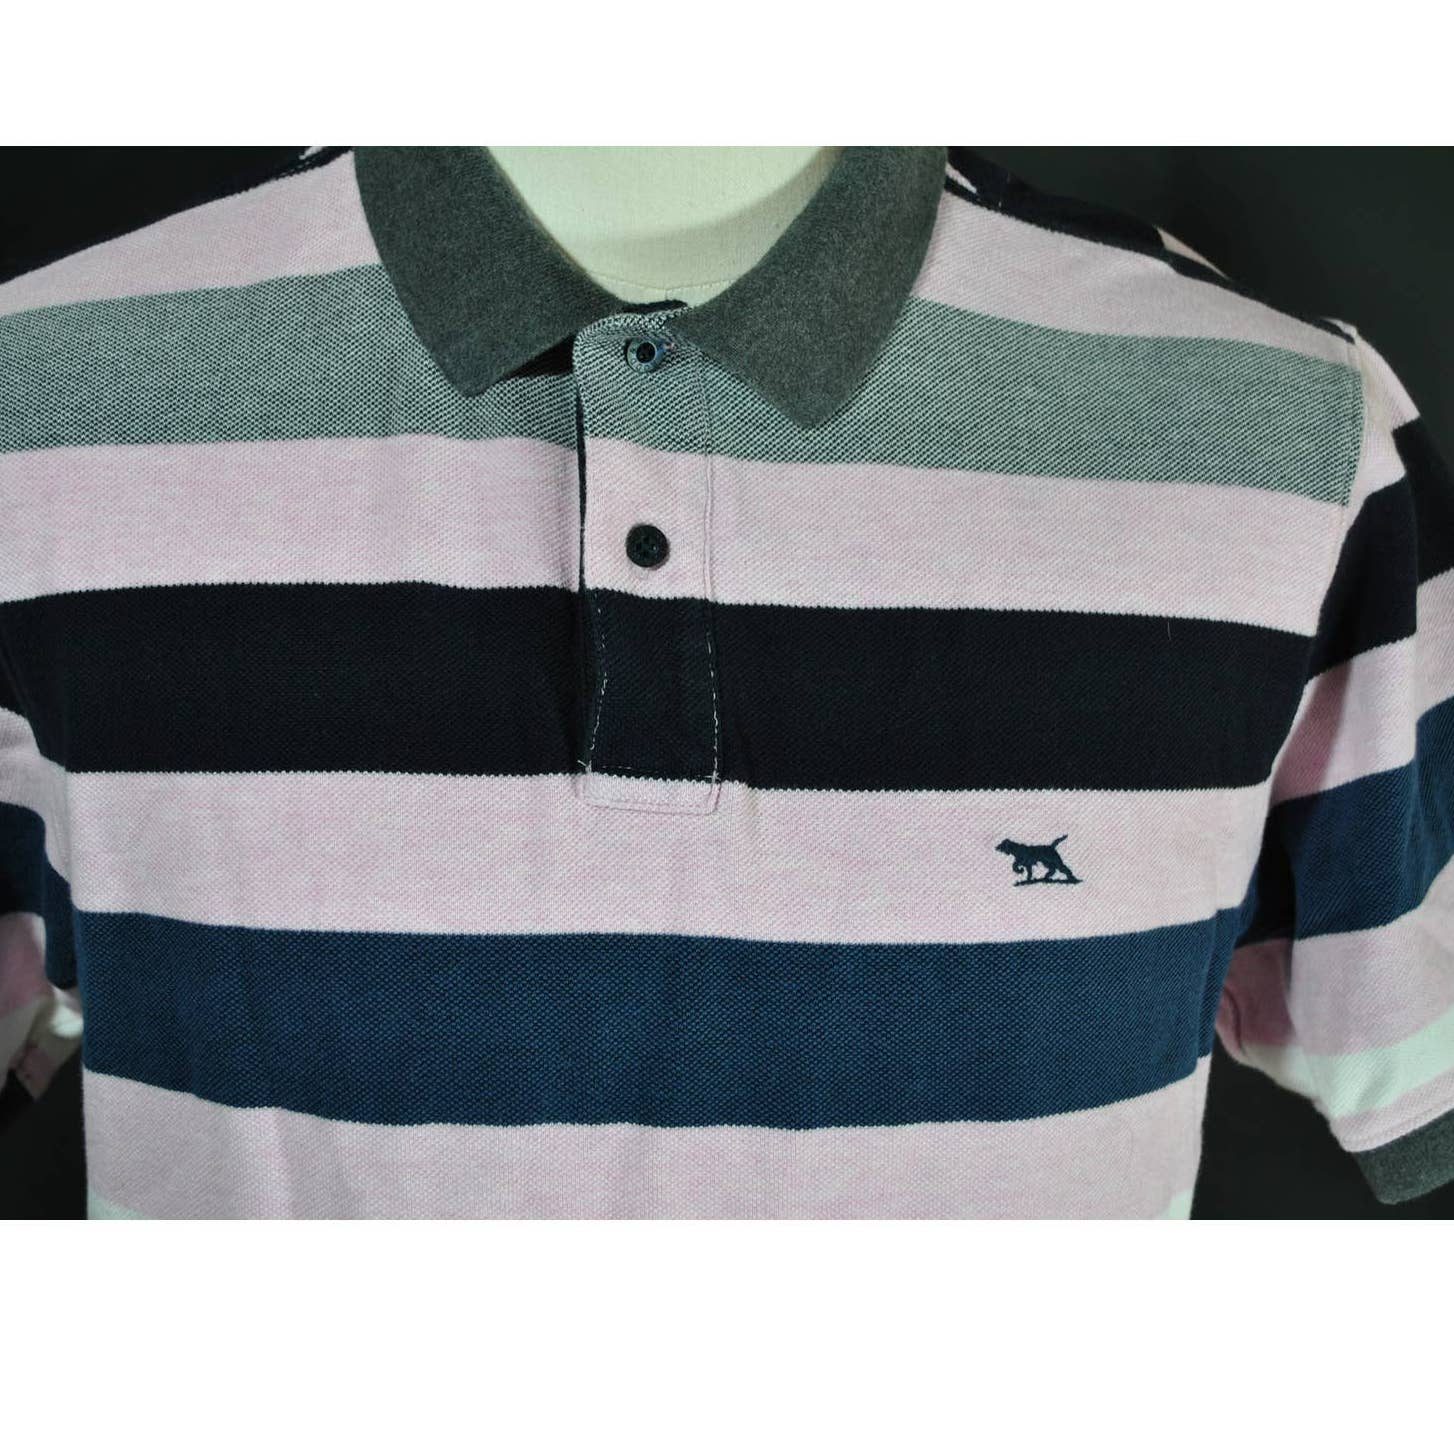 Rodd & Gunn Original Fit Pink Black Navy Polo Shirt - M